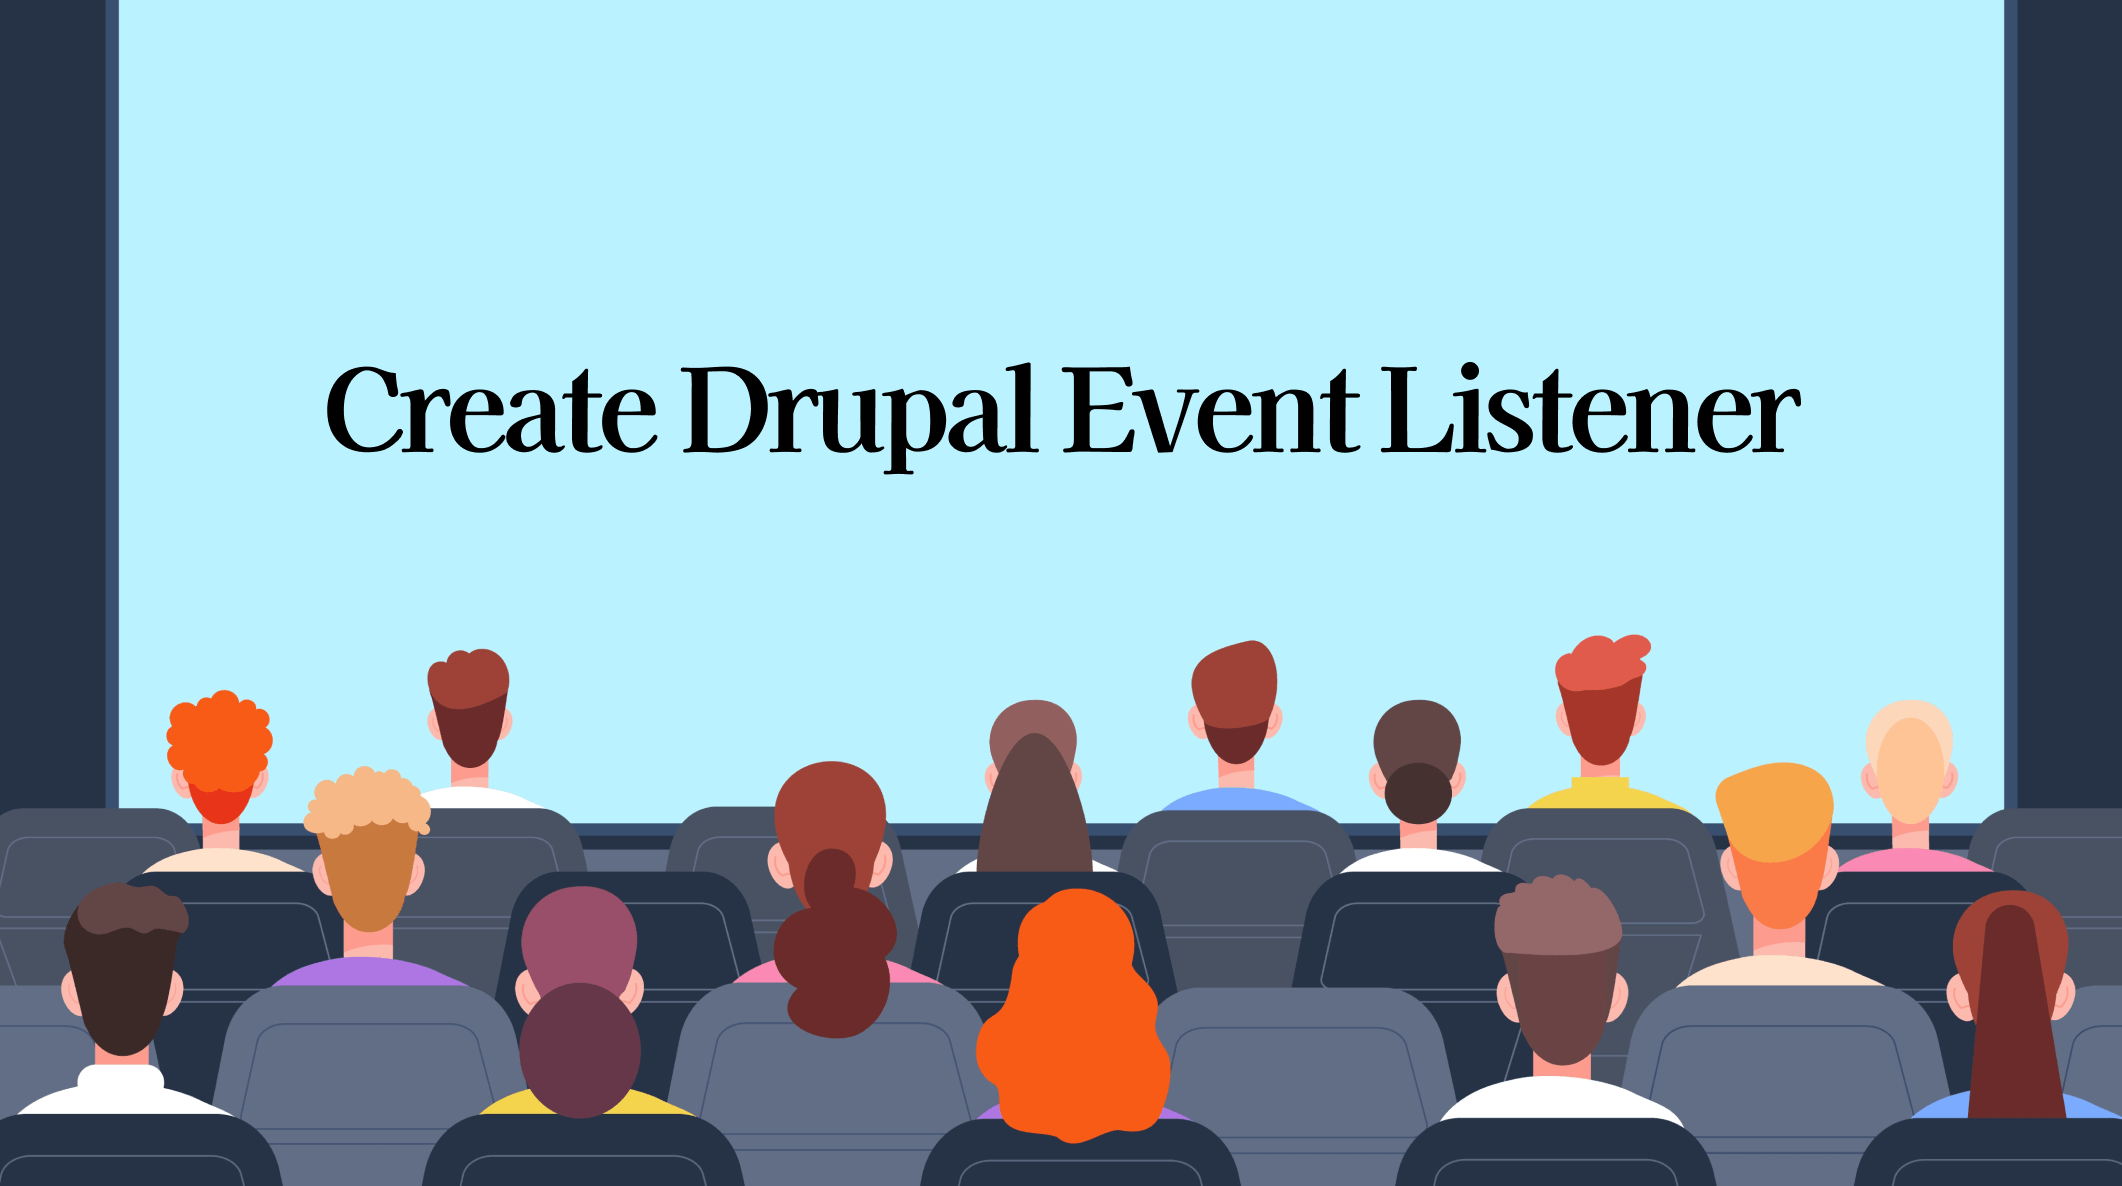 Create Drupal Event Listener